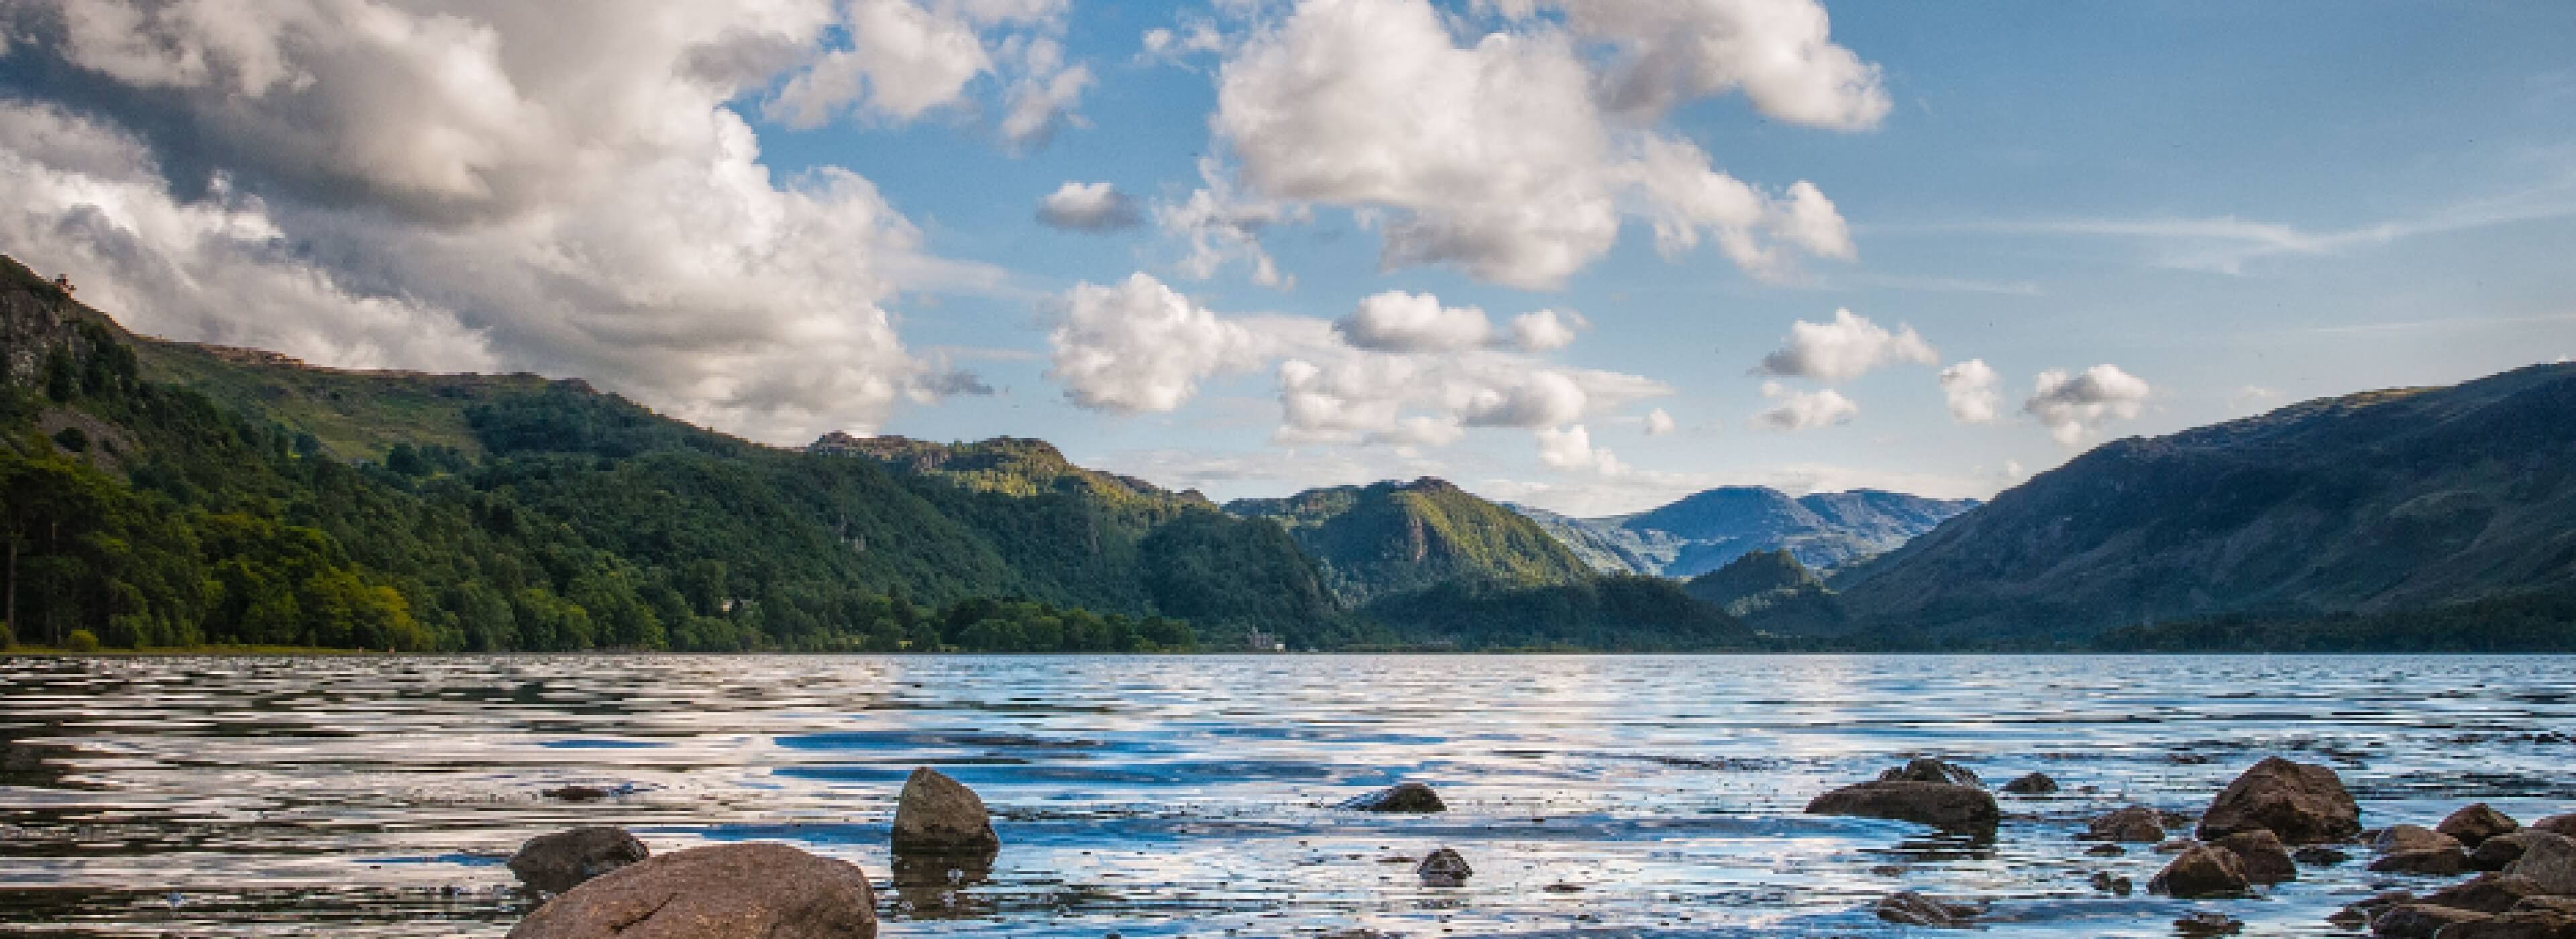 Leeucollection blog - Birdwatching in the Lake District hero slide 1